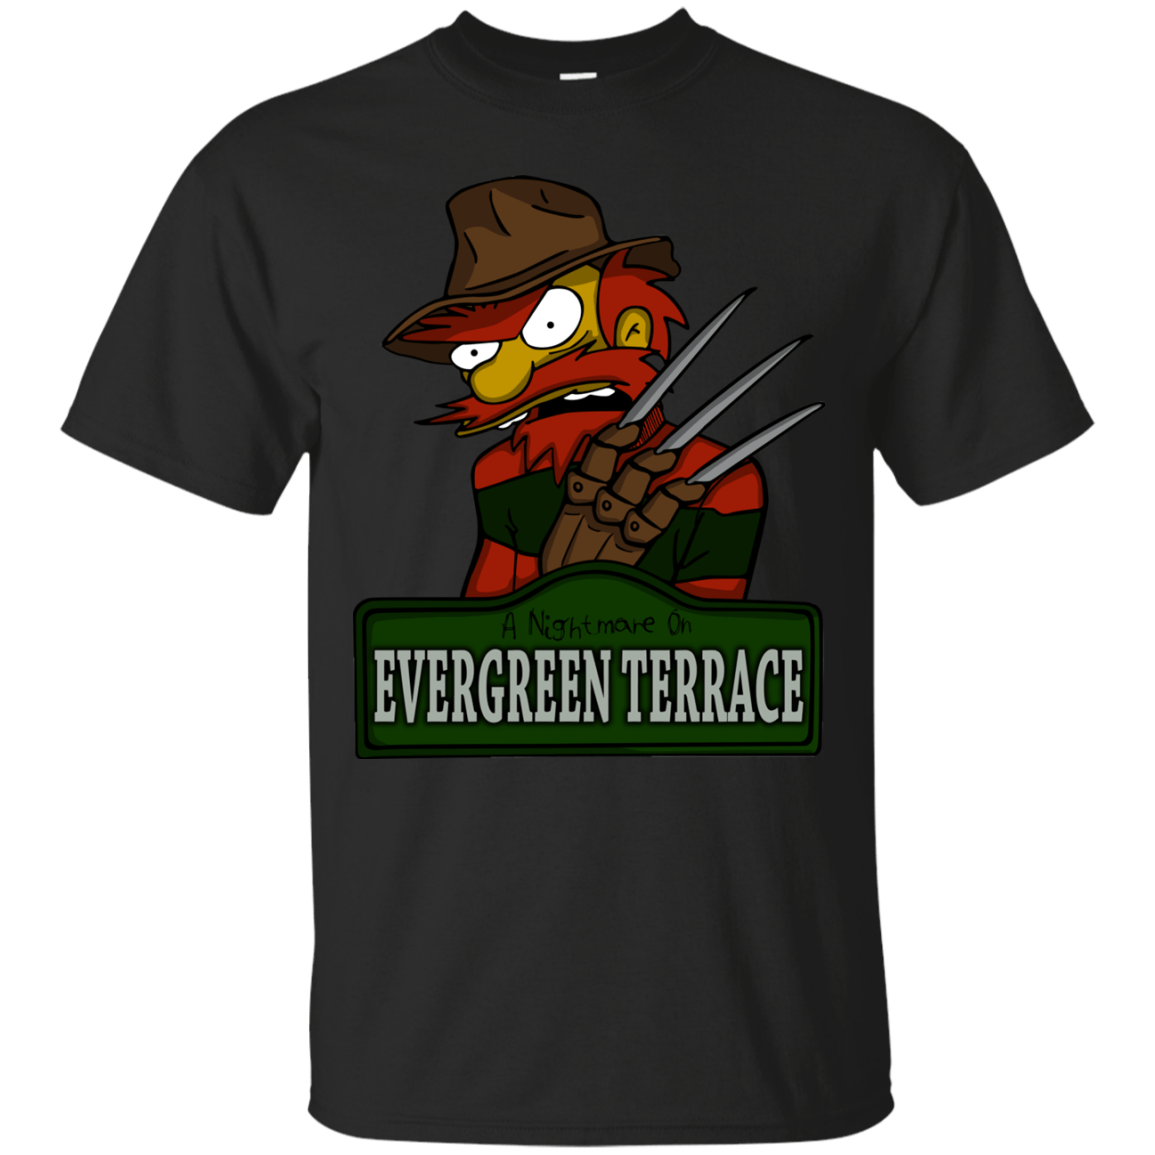 T-Shirts Black / Small A Nightmare on Springfield Sin Tramas T-Shirt